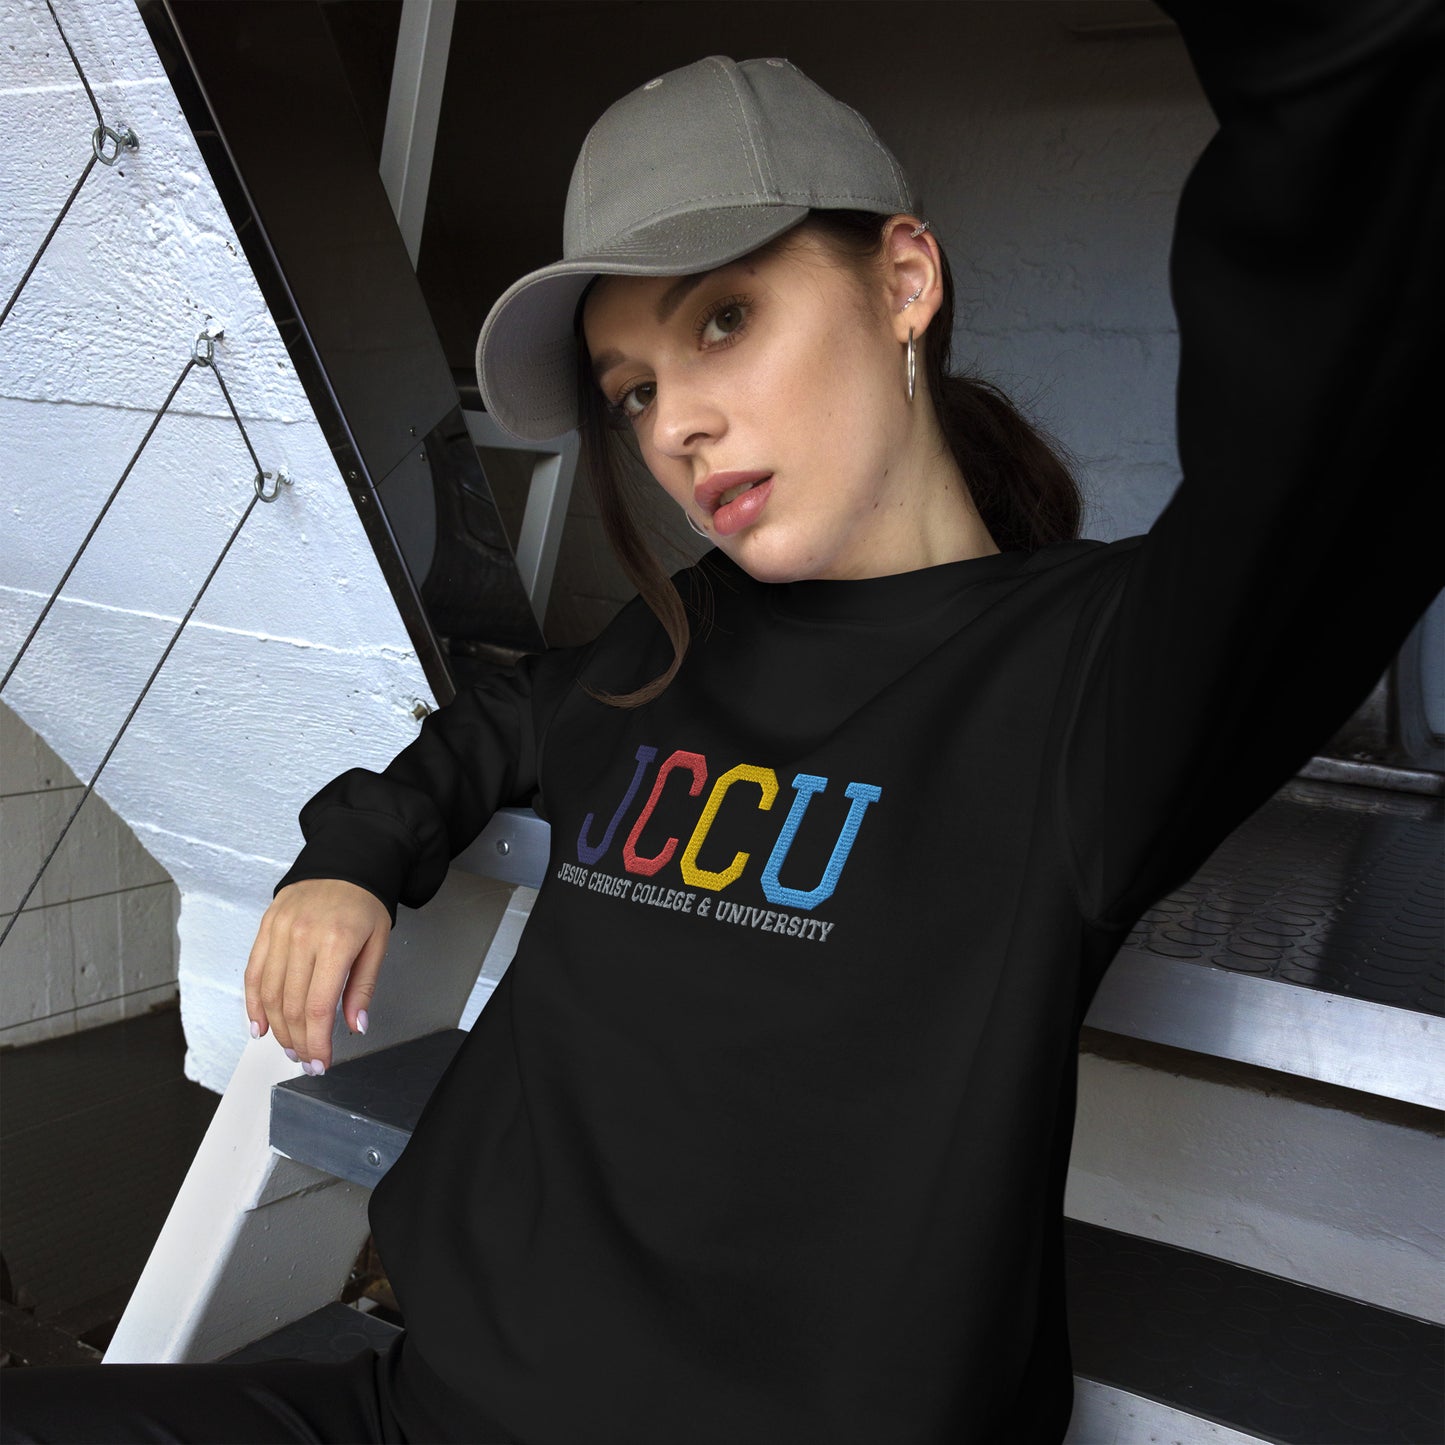 JCCU Embroidered Unisex Sweatshirt - Shirts & Tops